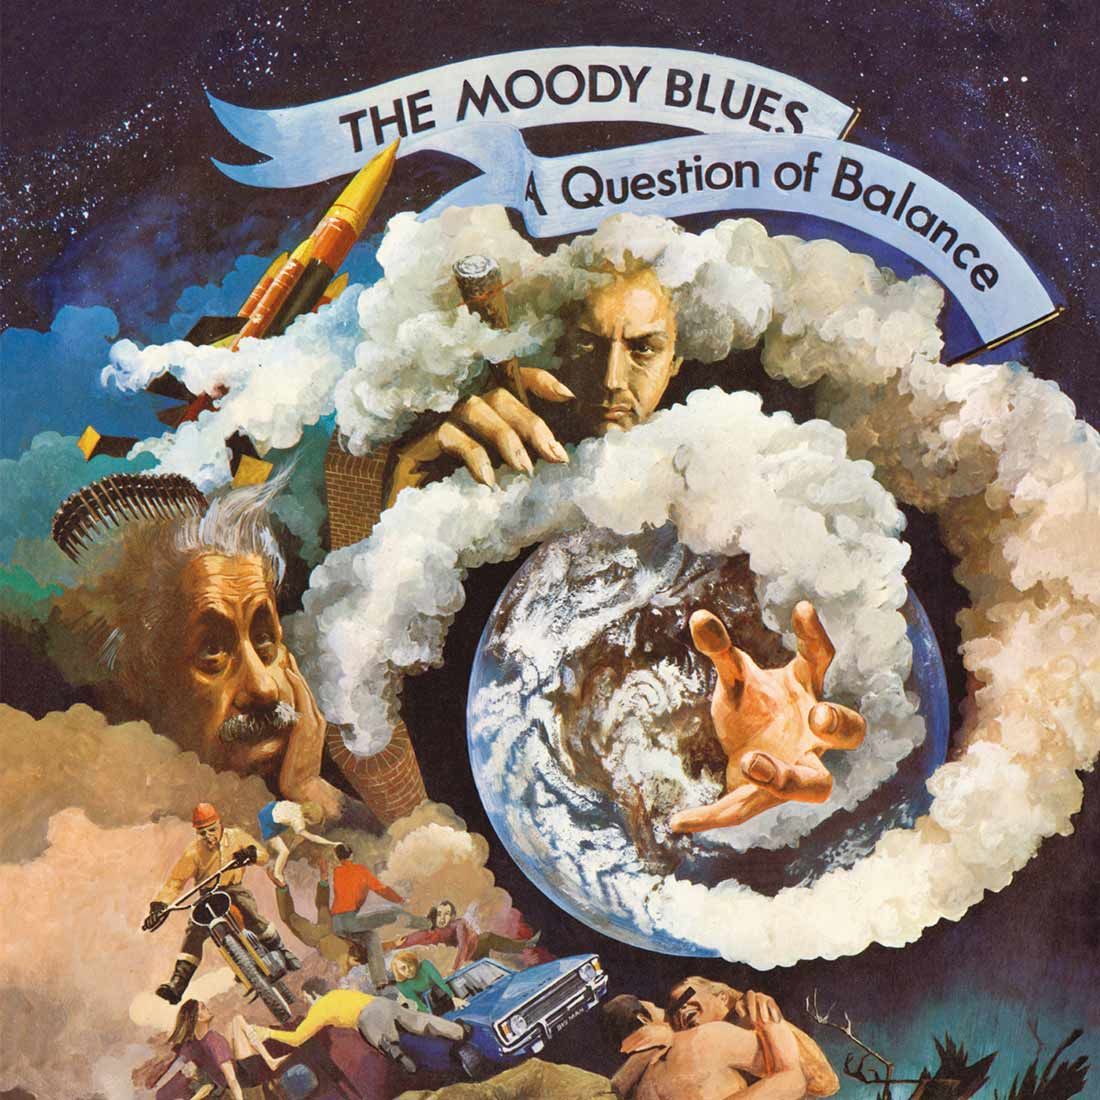 The Moody Blues - A Question Of Balance: Vinyl LP